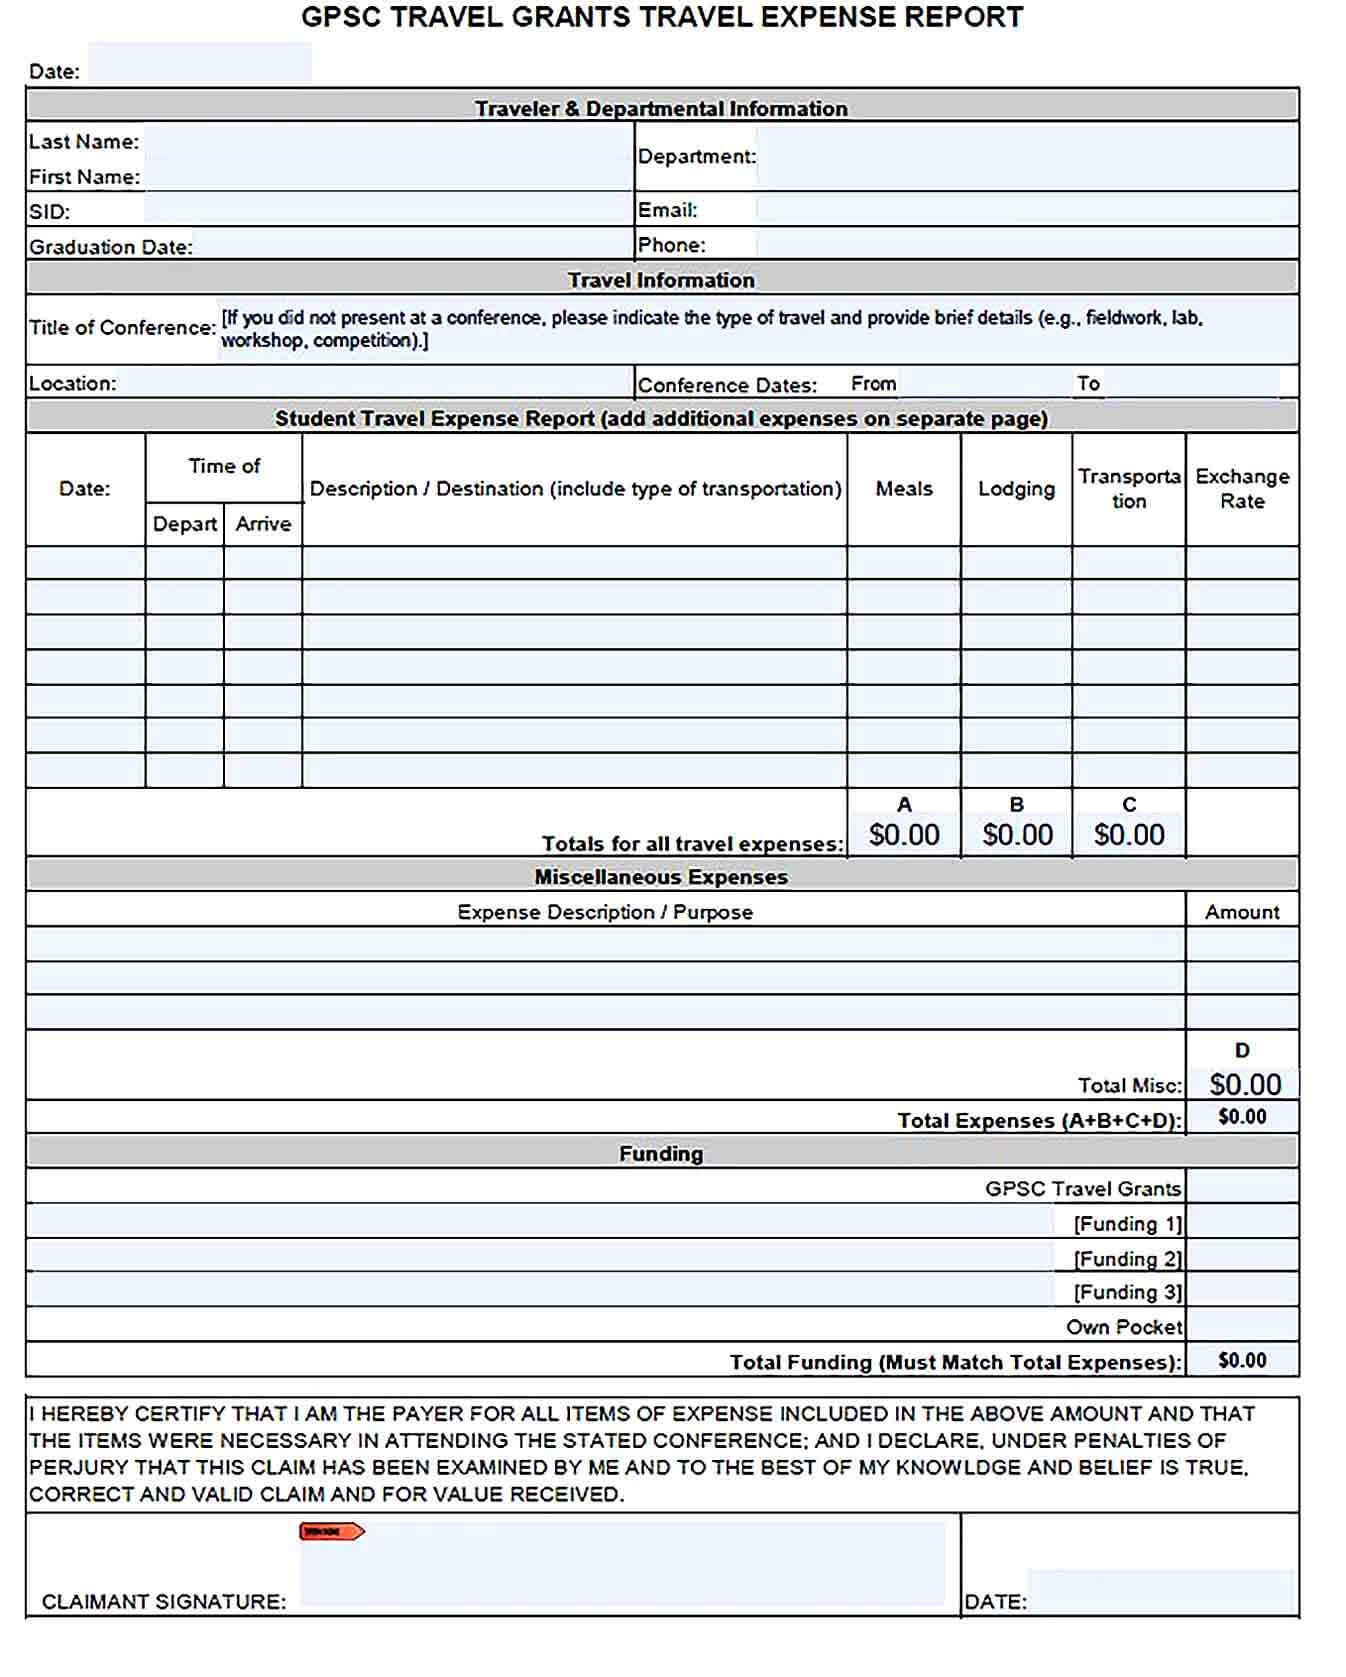 Sample Grant Expense Report Template